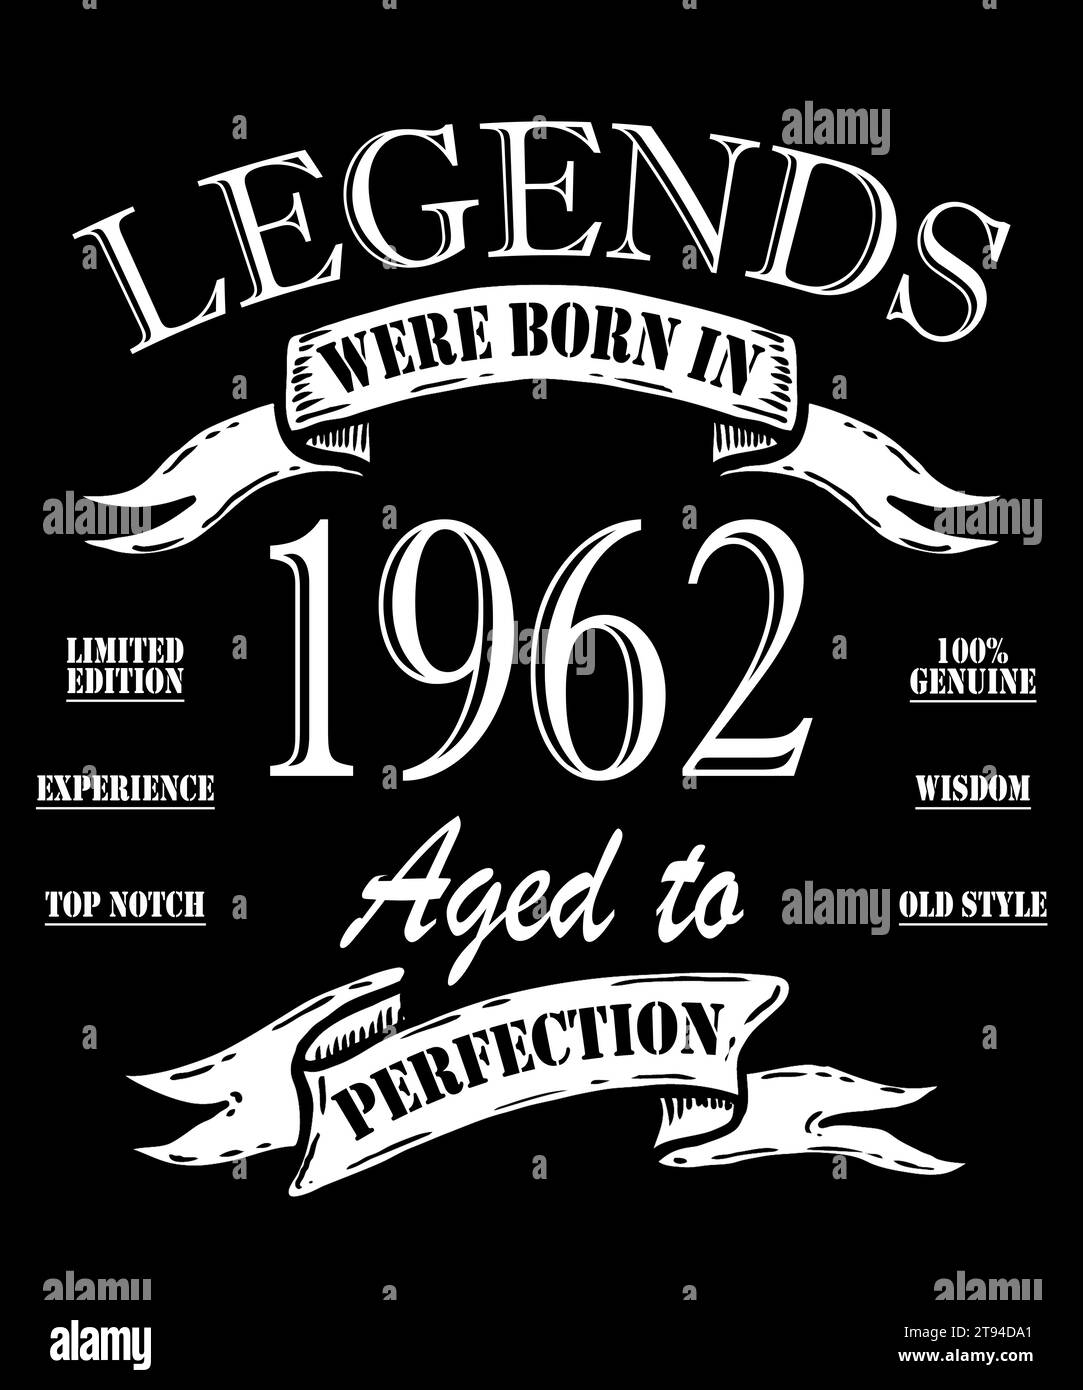 The year 1962 Legends were Born, Vintage 1962 birthday. Stock Photo